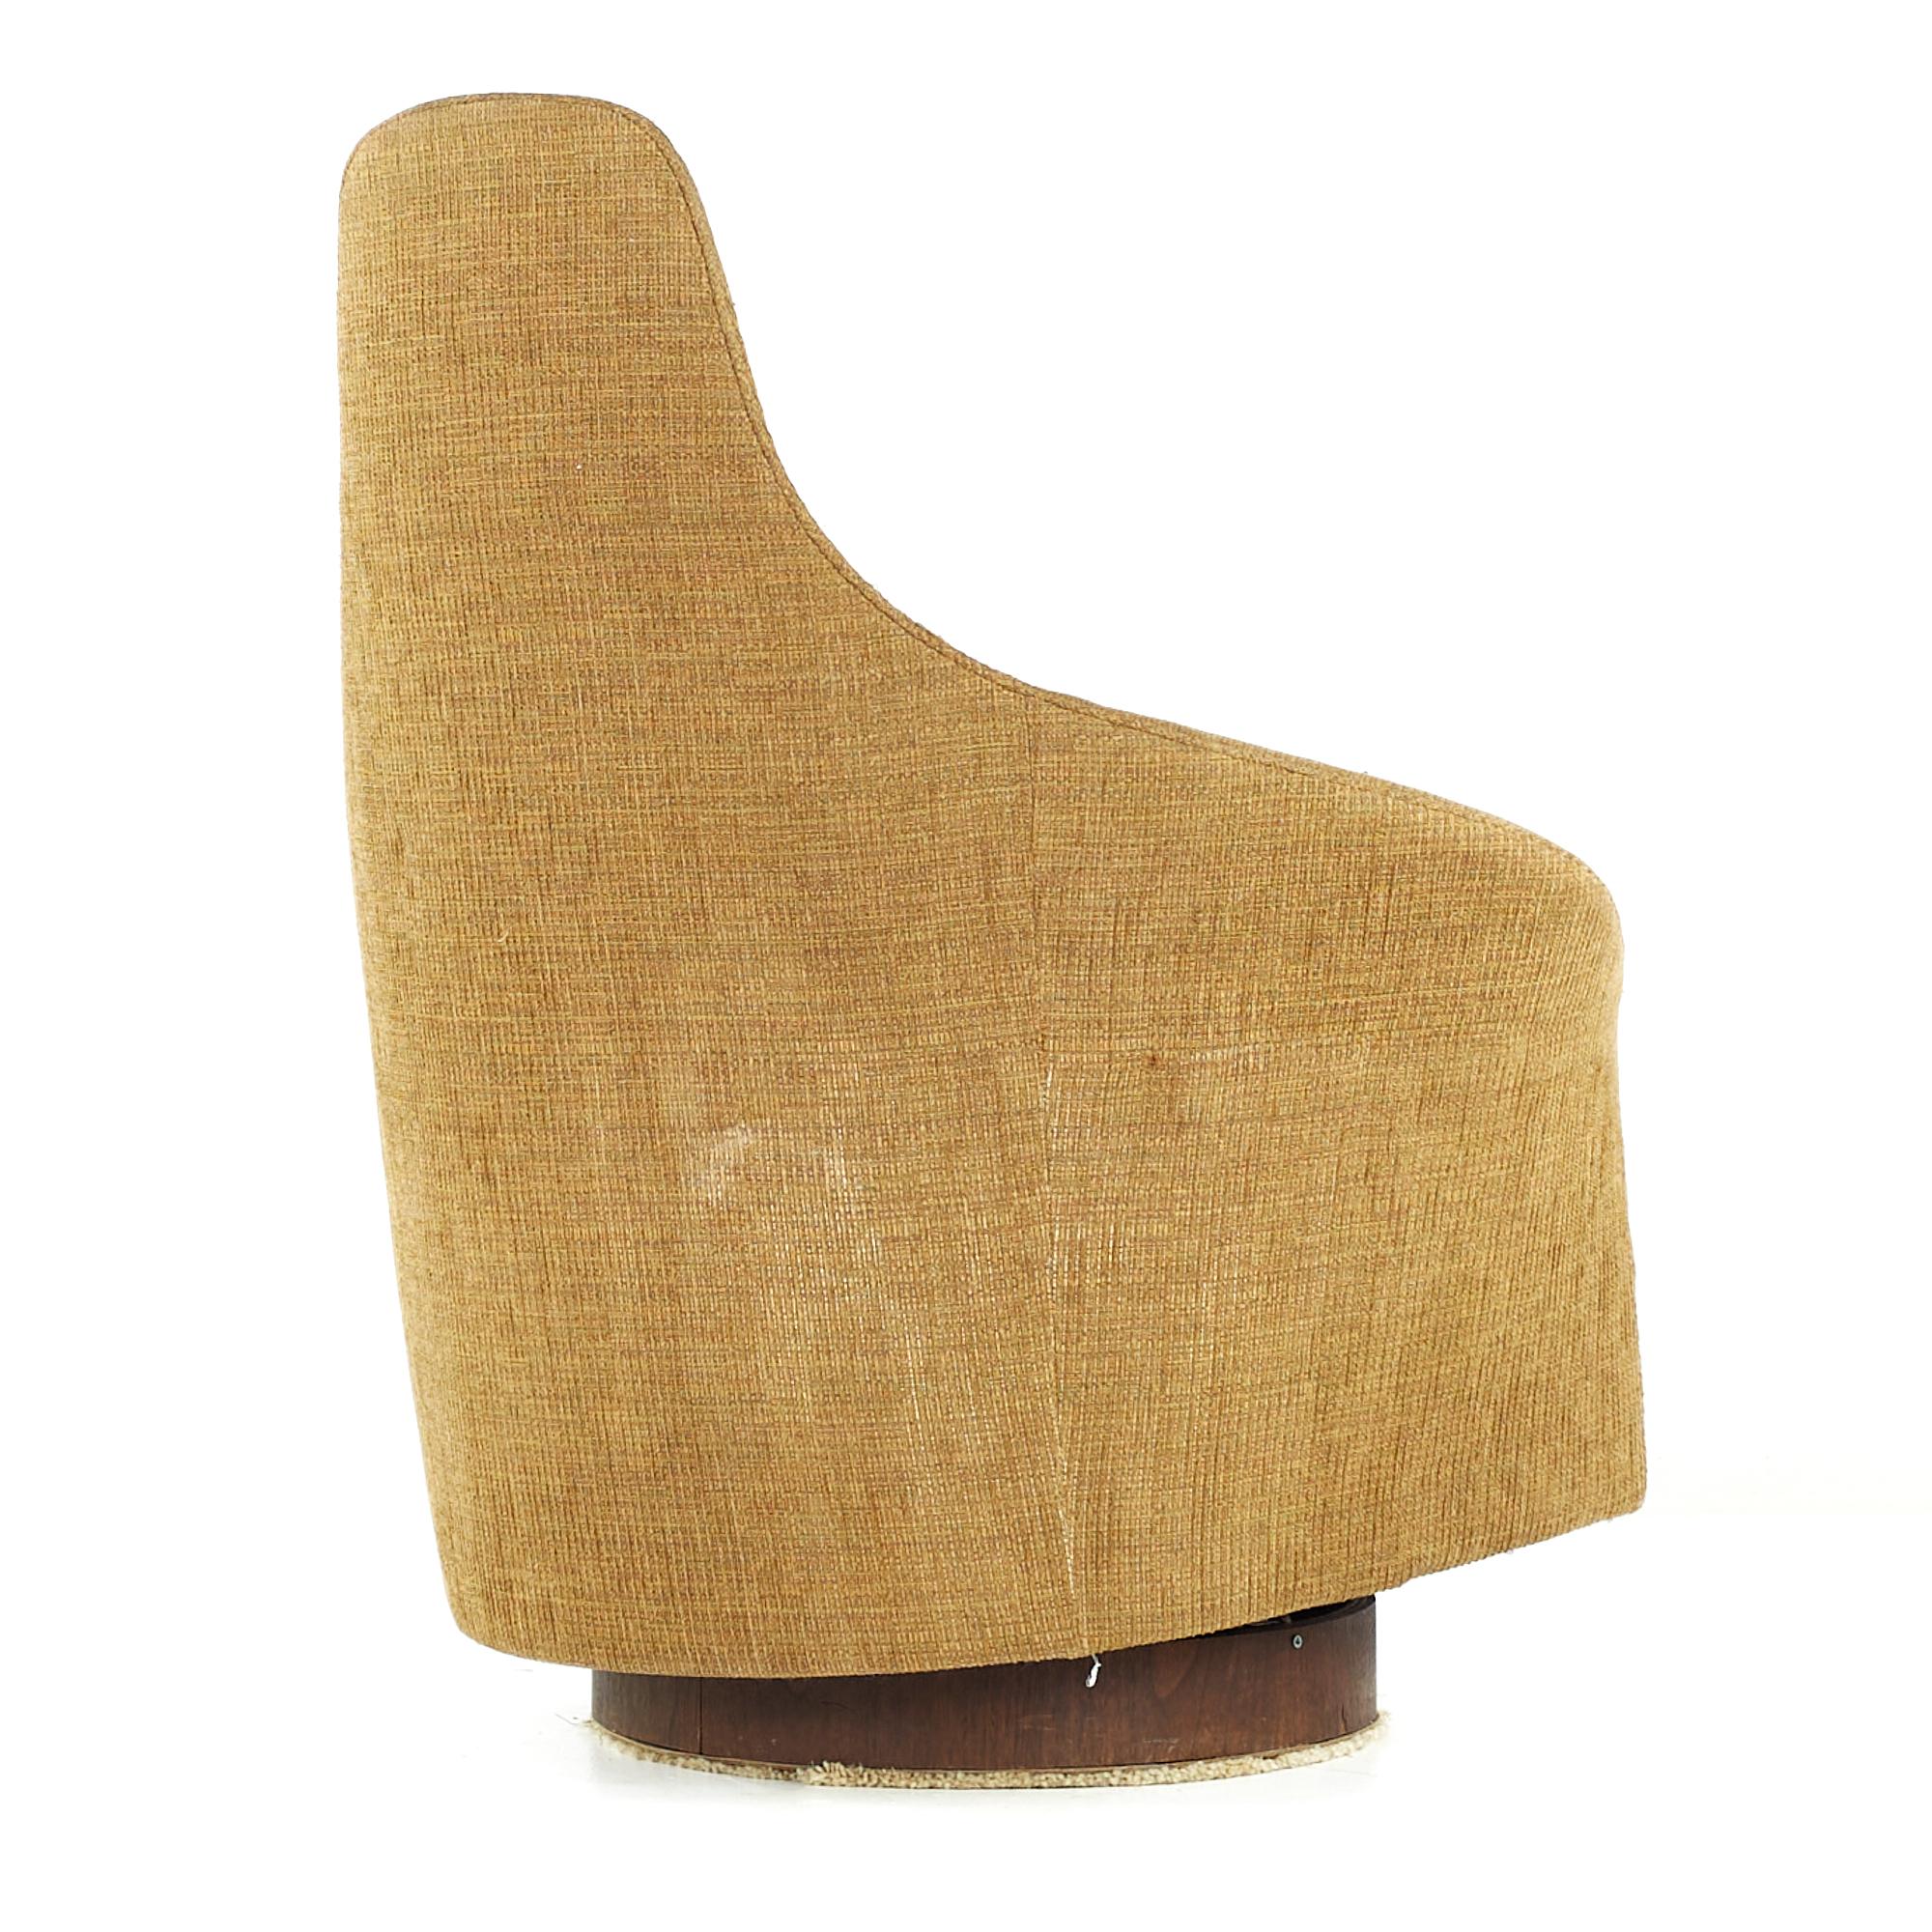 Adrian Pearsall for Craft Associates Midcentury Swivel Tilt Chair For Sale 1